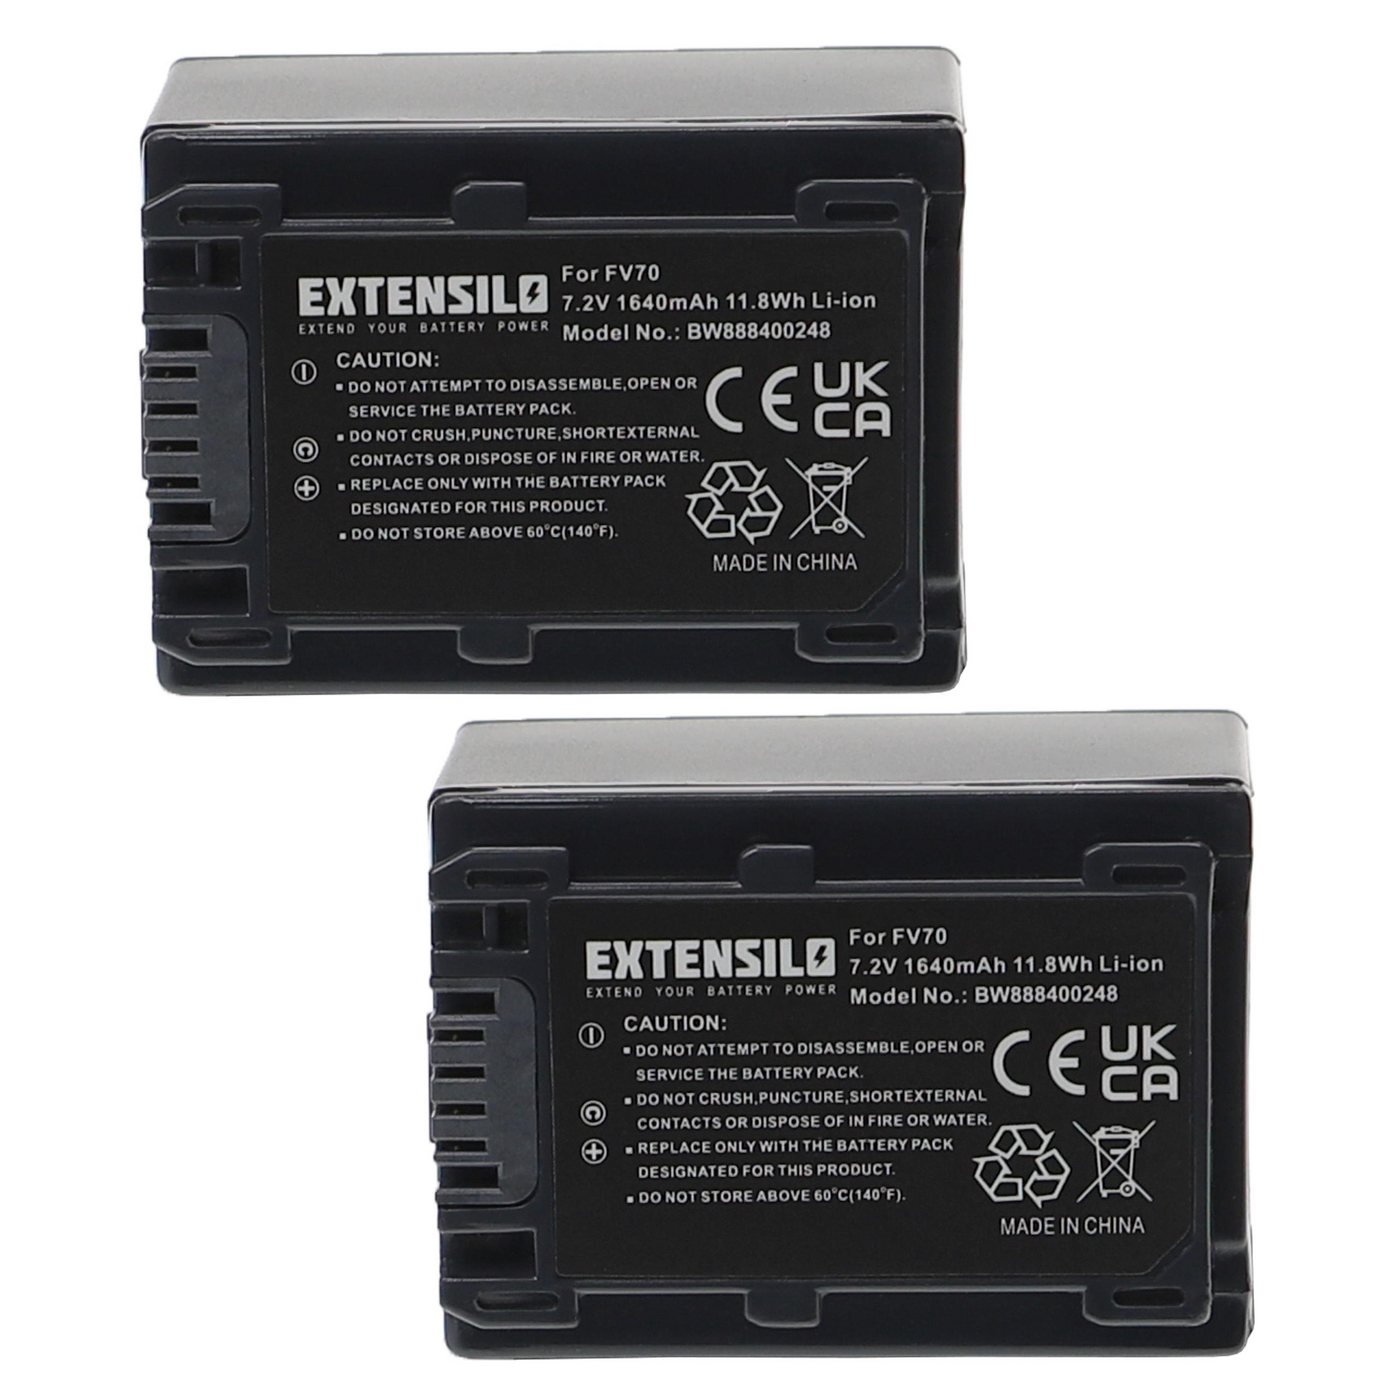 Extensilo passend für Sony DCR-HC36E, DCR-HC38E, DCR-HC32E, DCR-HC35E, DCR-HC37E, DCR-HC39E, DCR-HC40E Kamera / Foto DSLR / Camcorder Analog / Camcorder Digital (1640mAh, 7,2V, Li-Ion) Kamera-Akku 1640 mAh von Extensilo